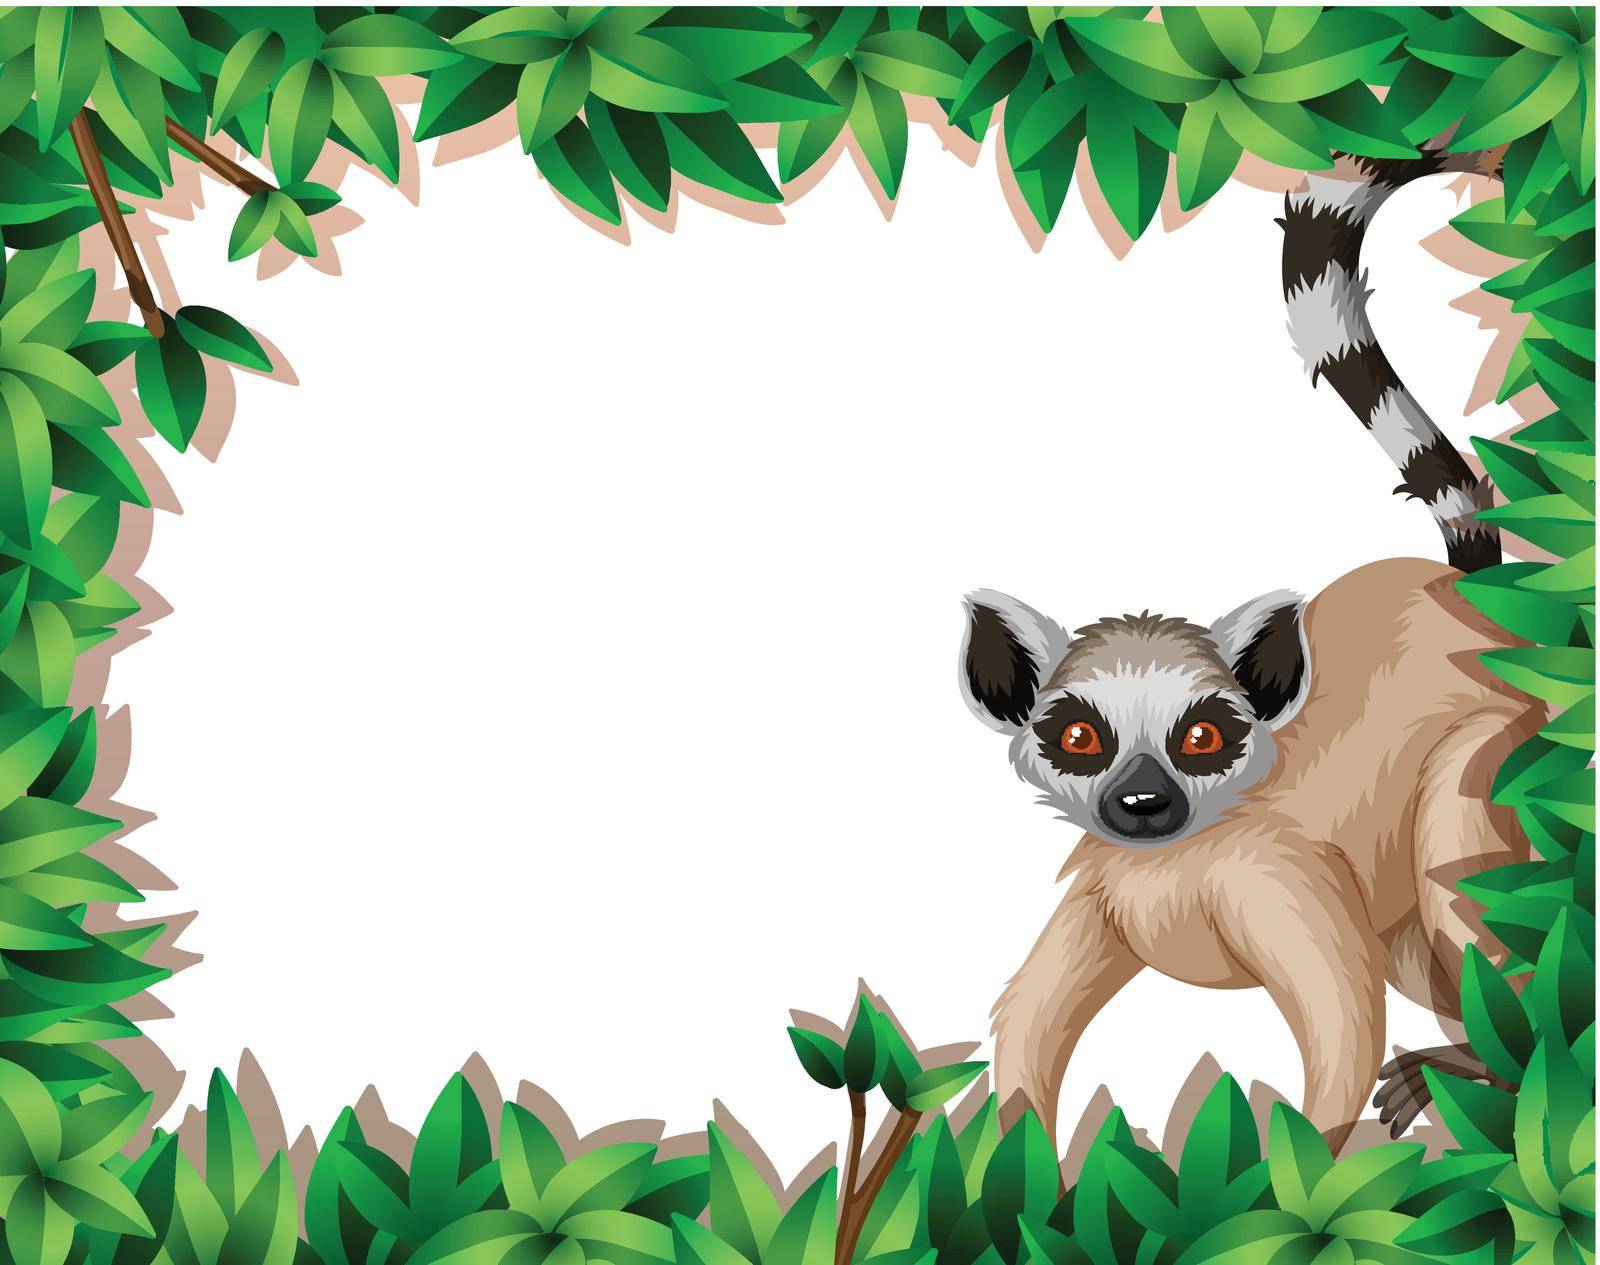 Lemur in nature frame by iimages